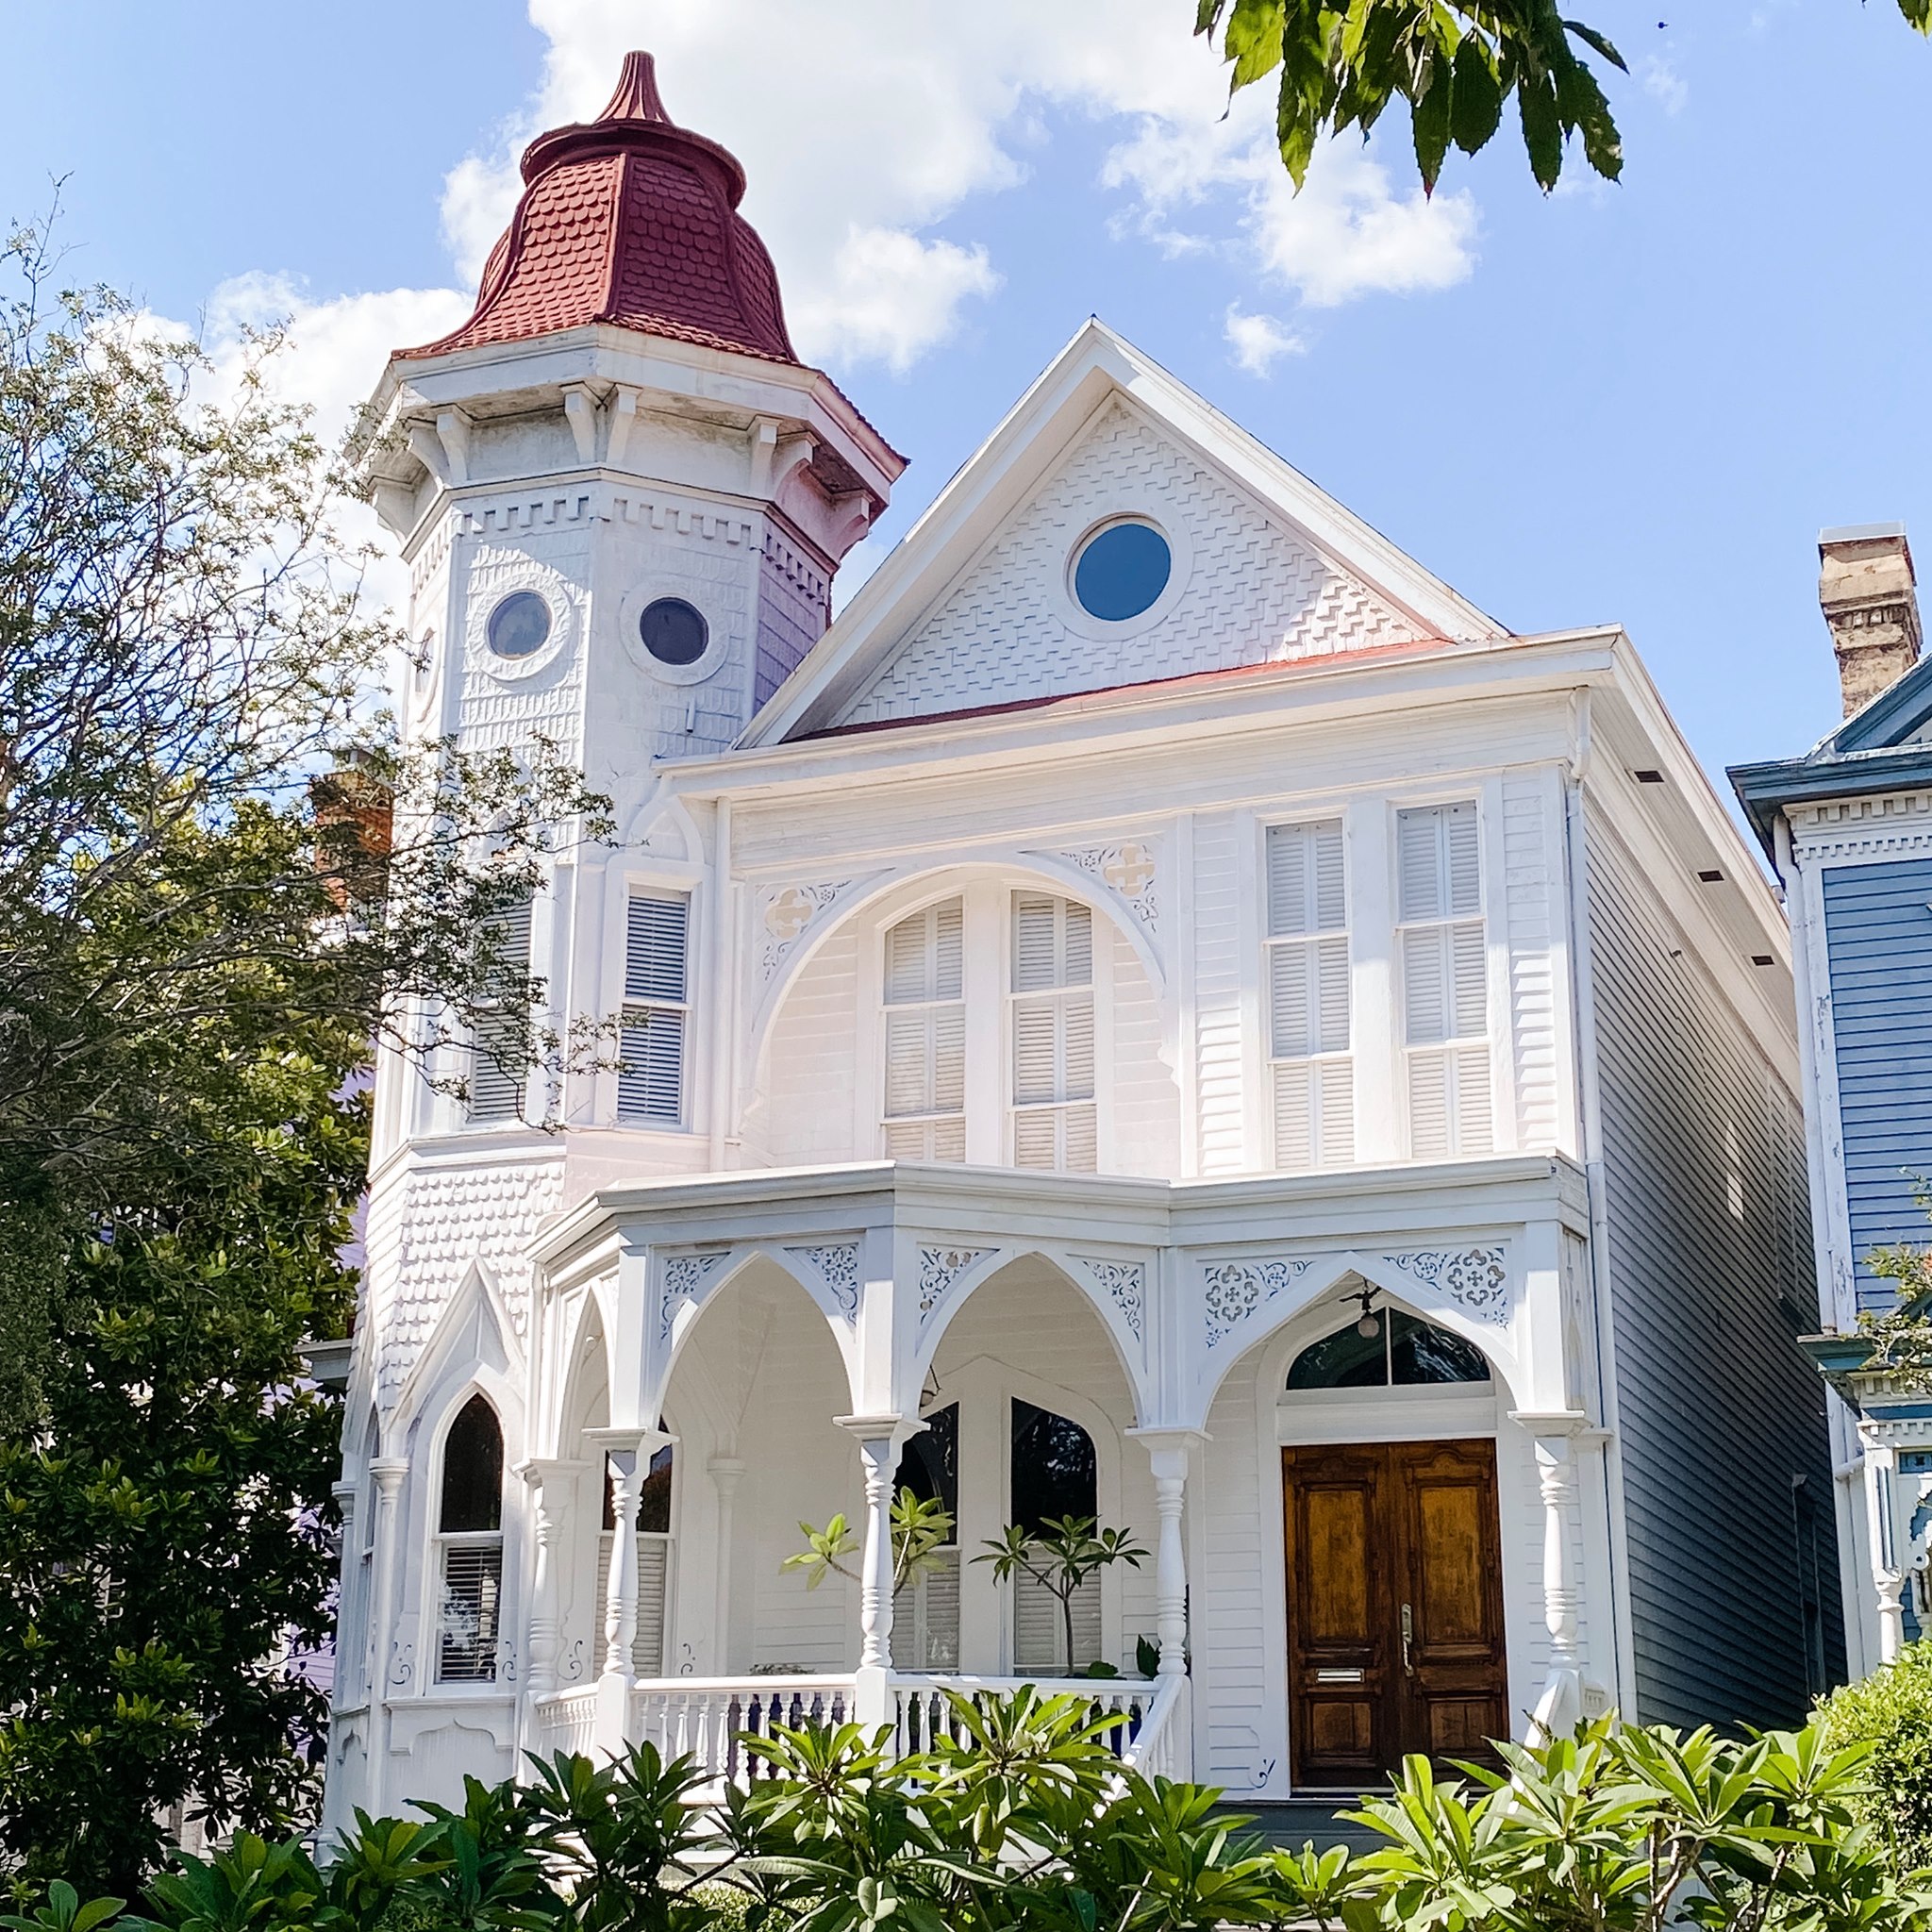 Laura Jones House in Savannah